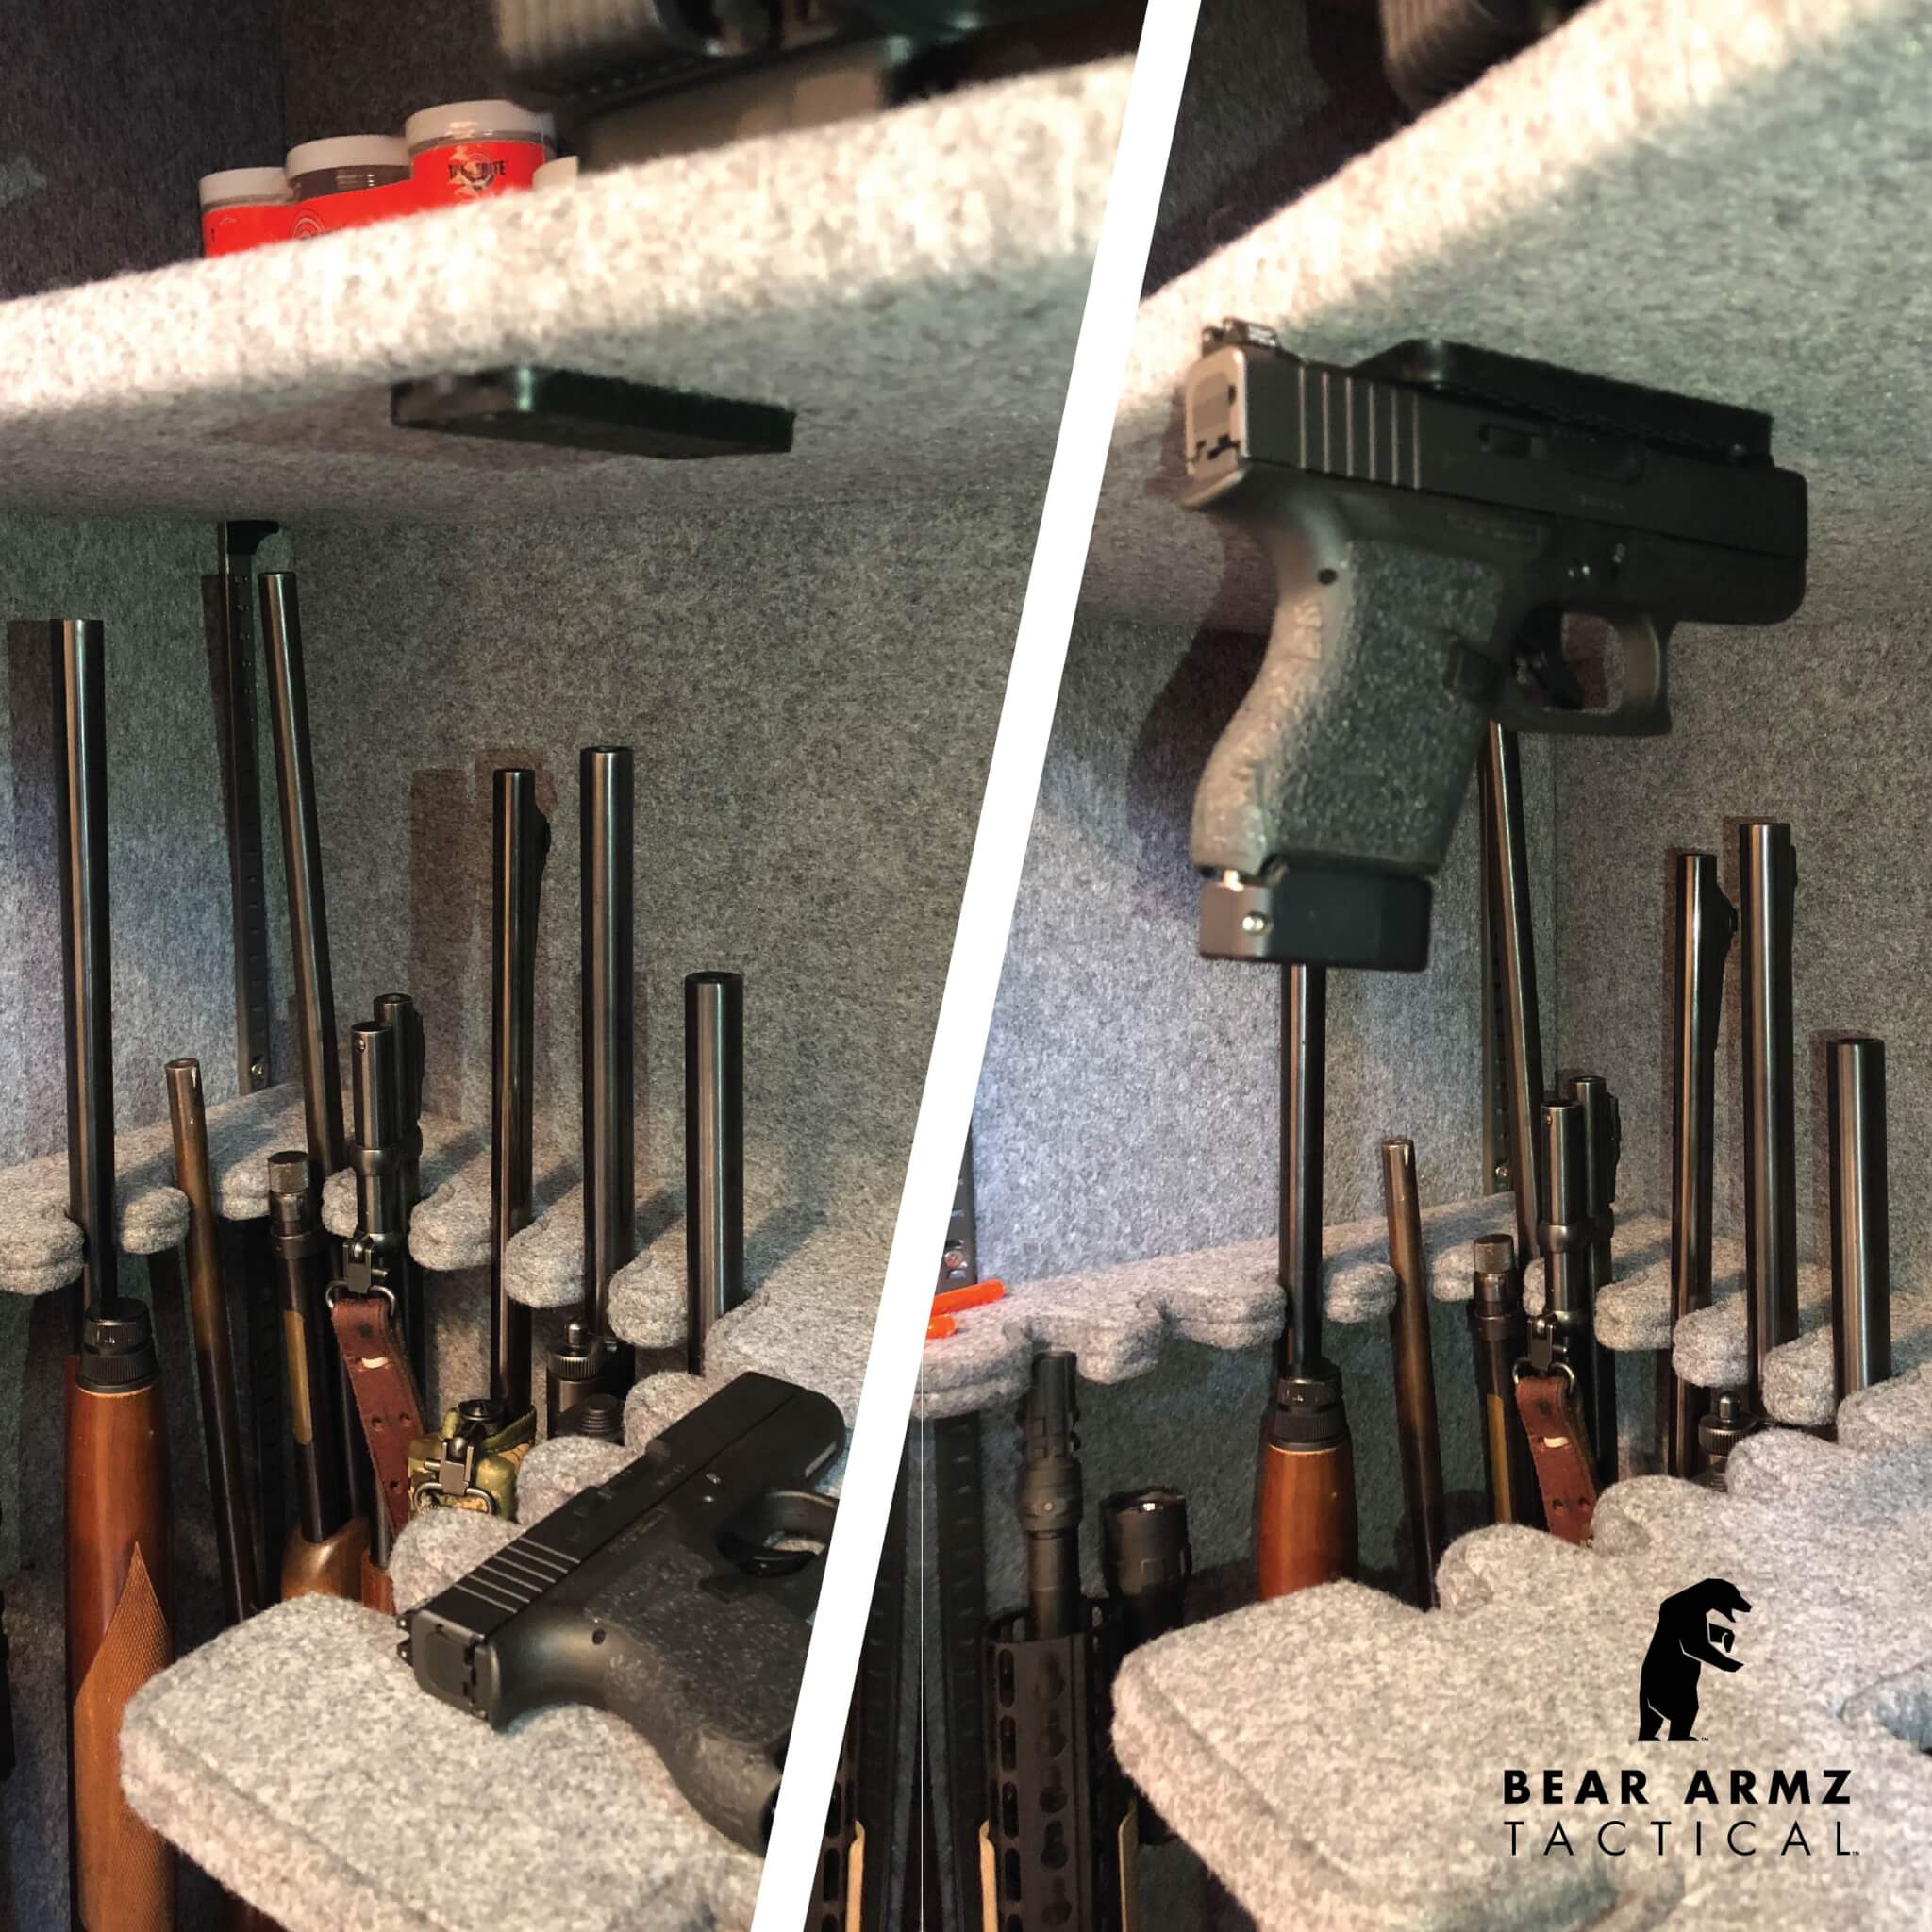 4Pack Magnet Holster Gun Pistol Rifle Magnetic Holder  Under Desk Mount Stand 